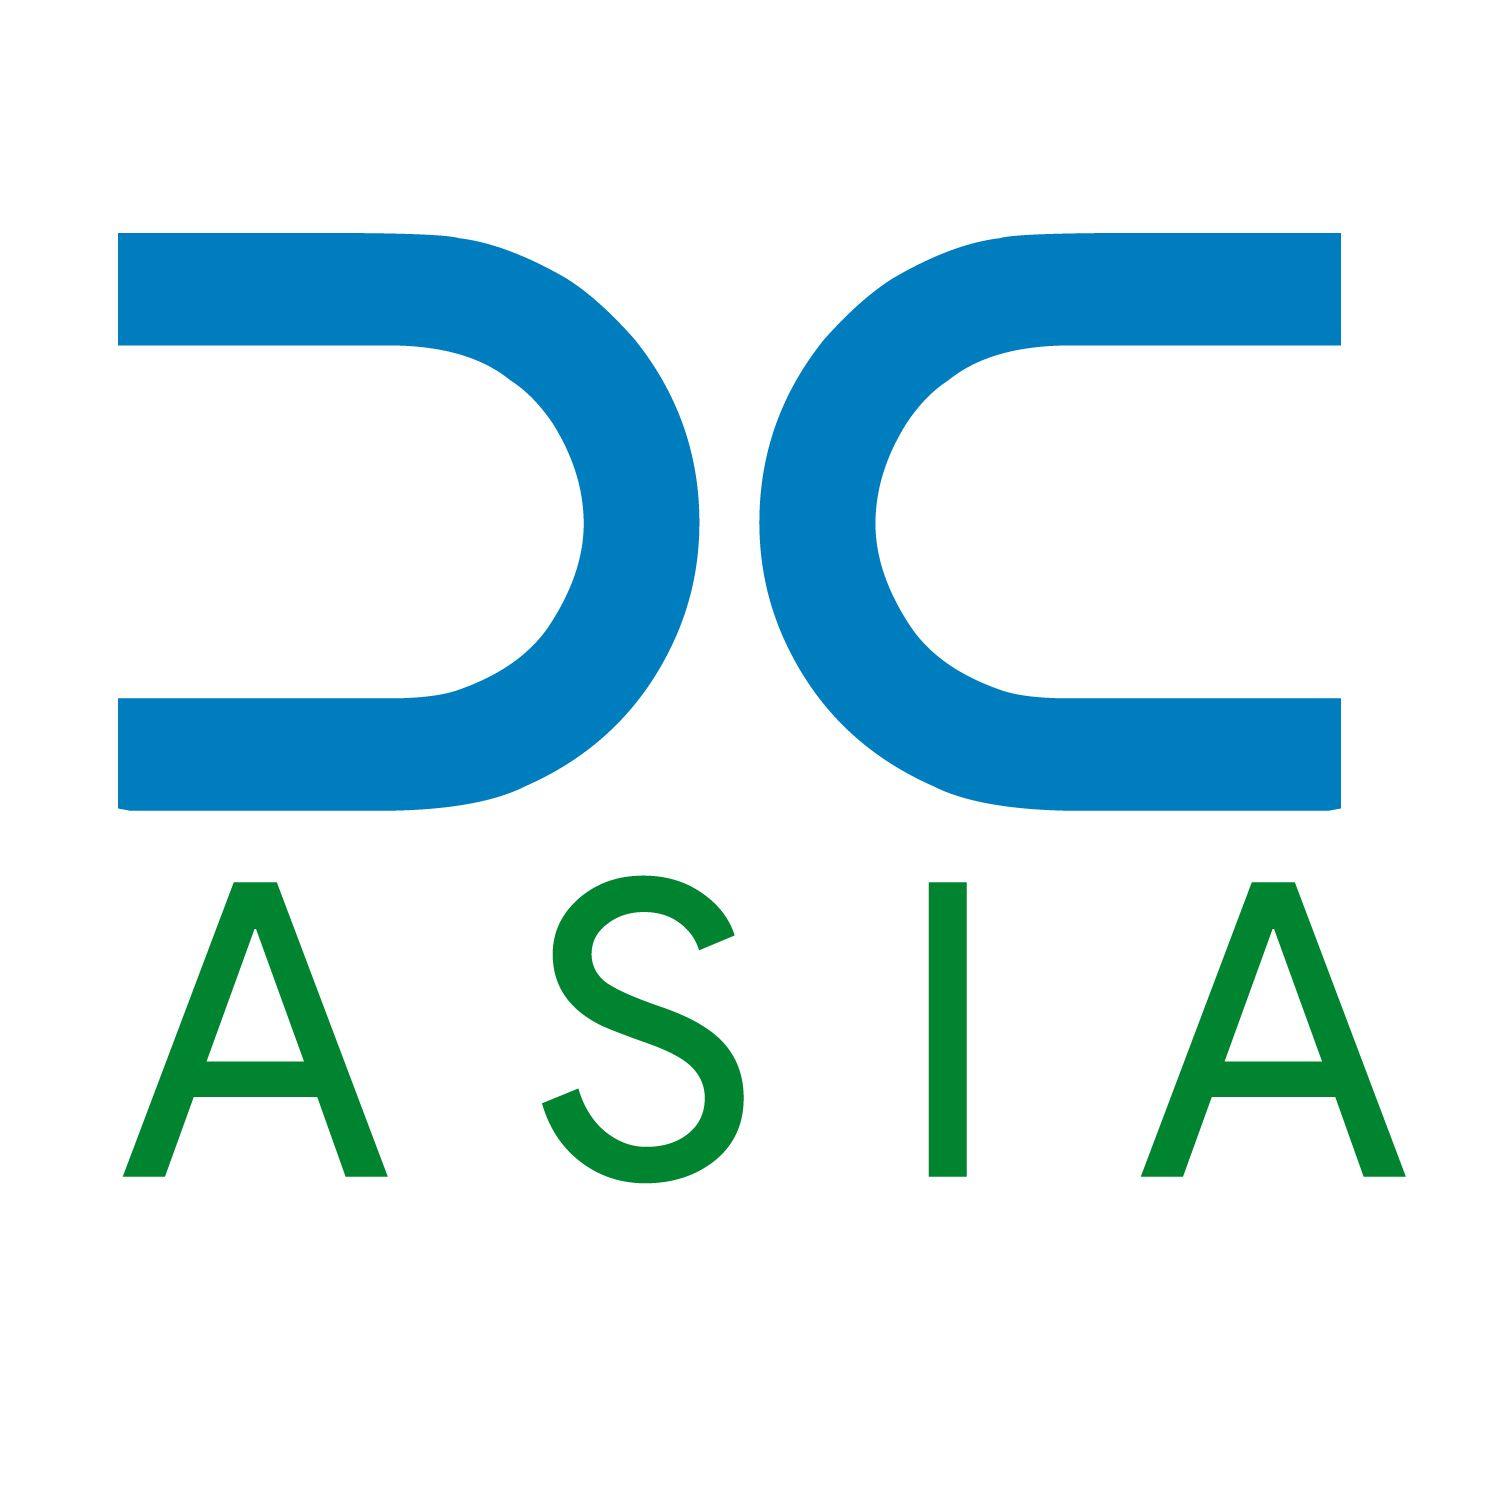 Japanese Technology Company Logo - Professional, Playful, Information Technology Logo Design for DC